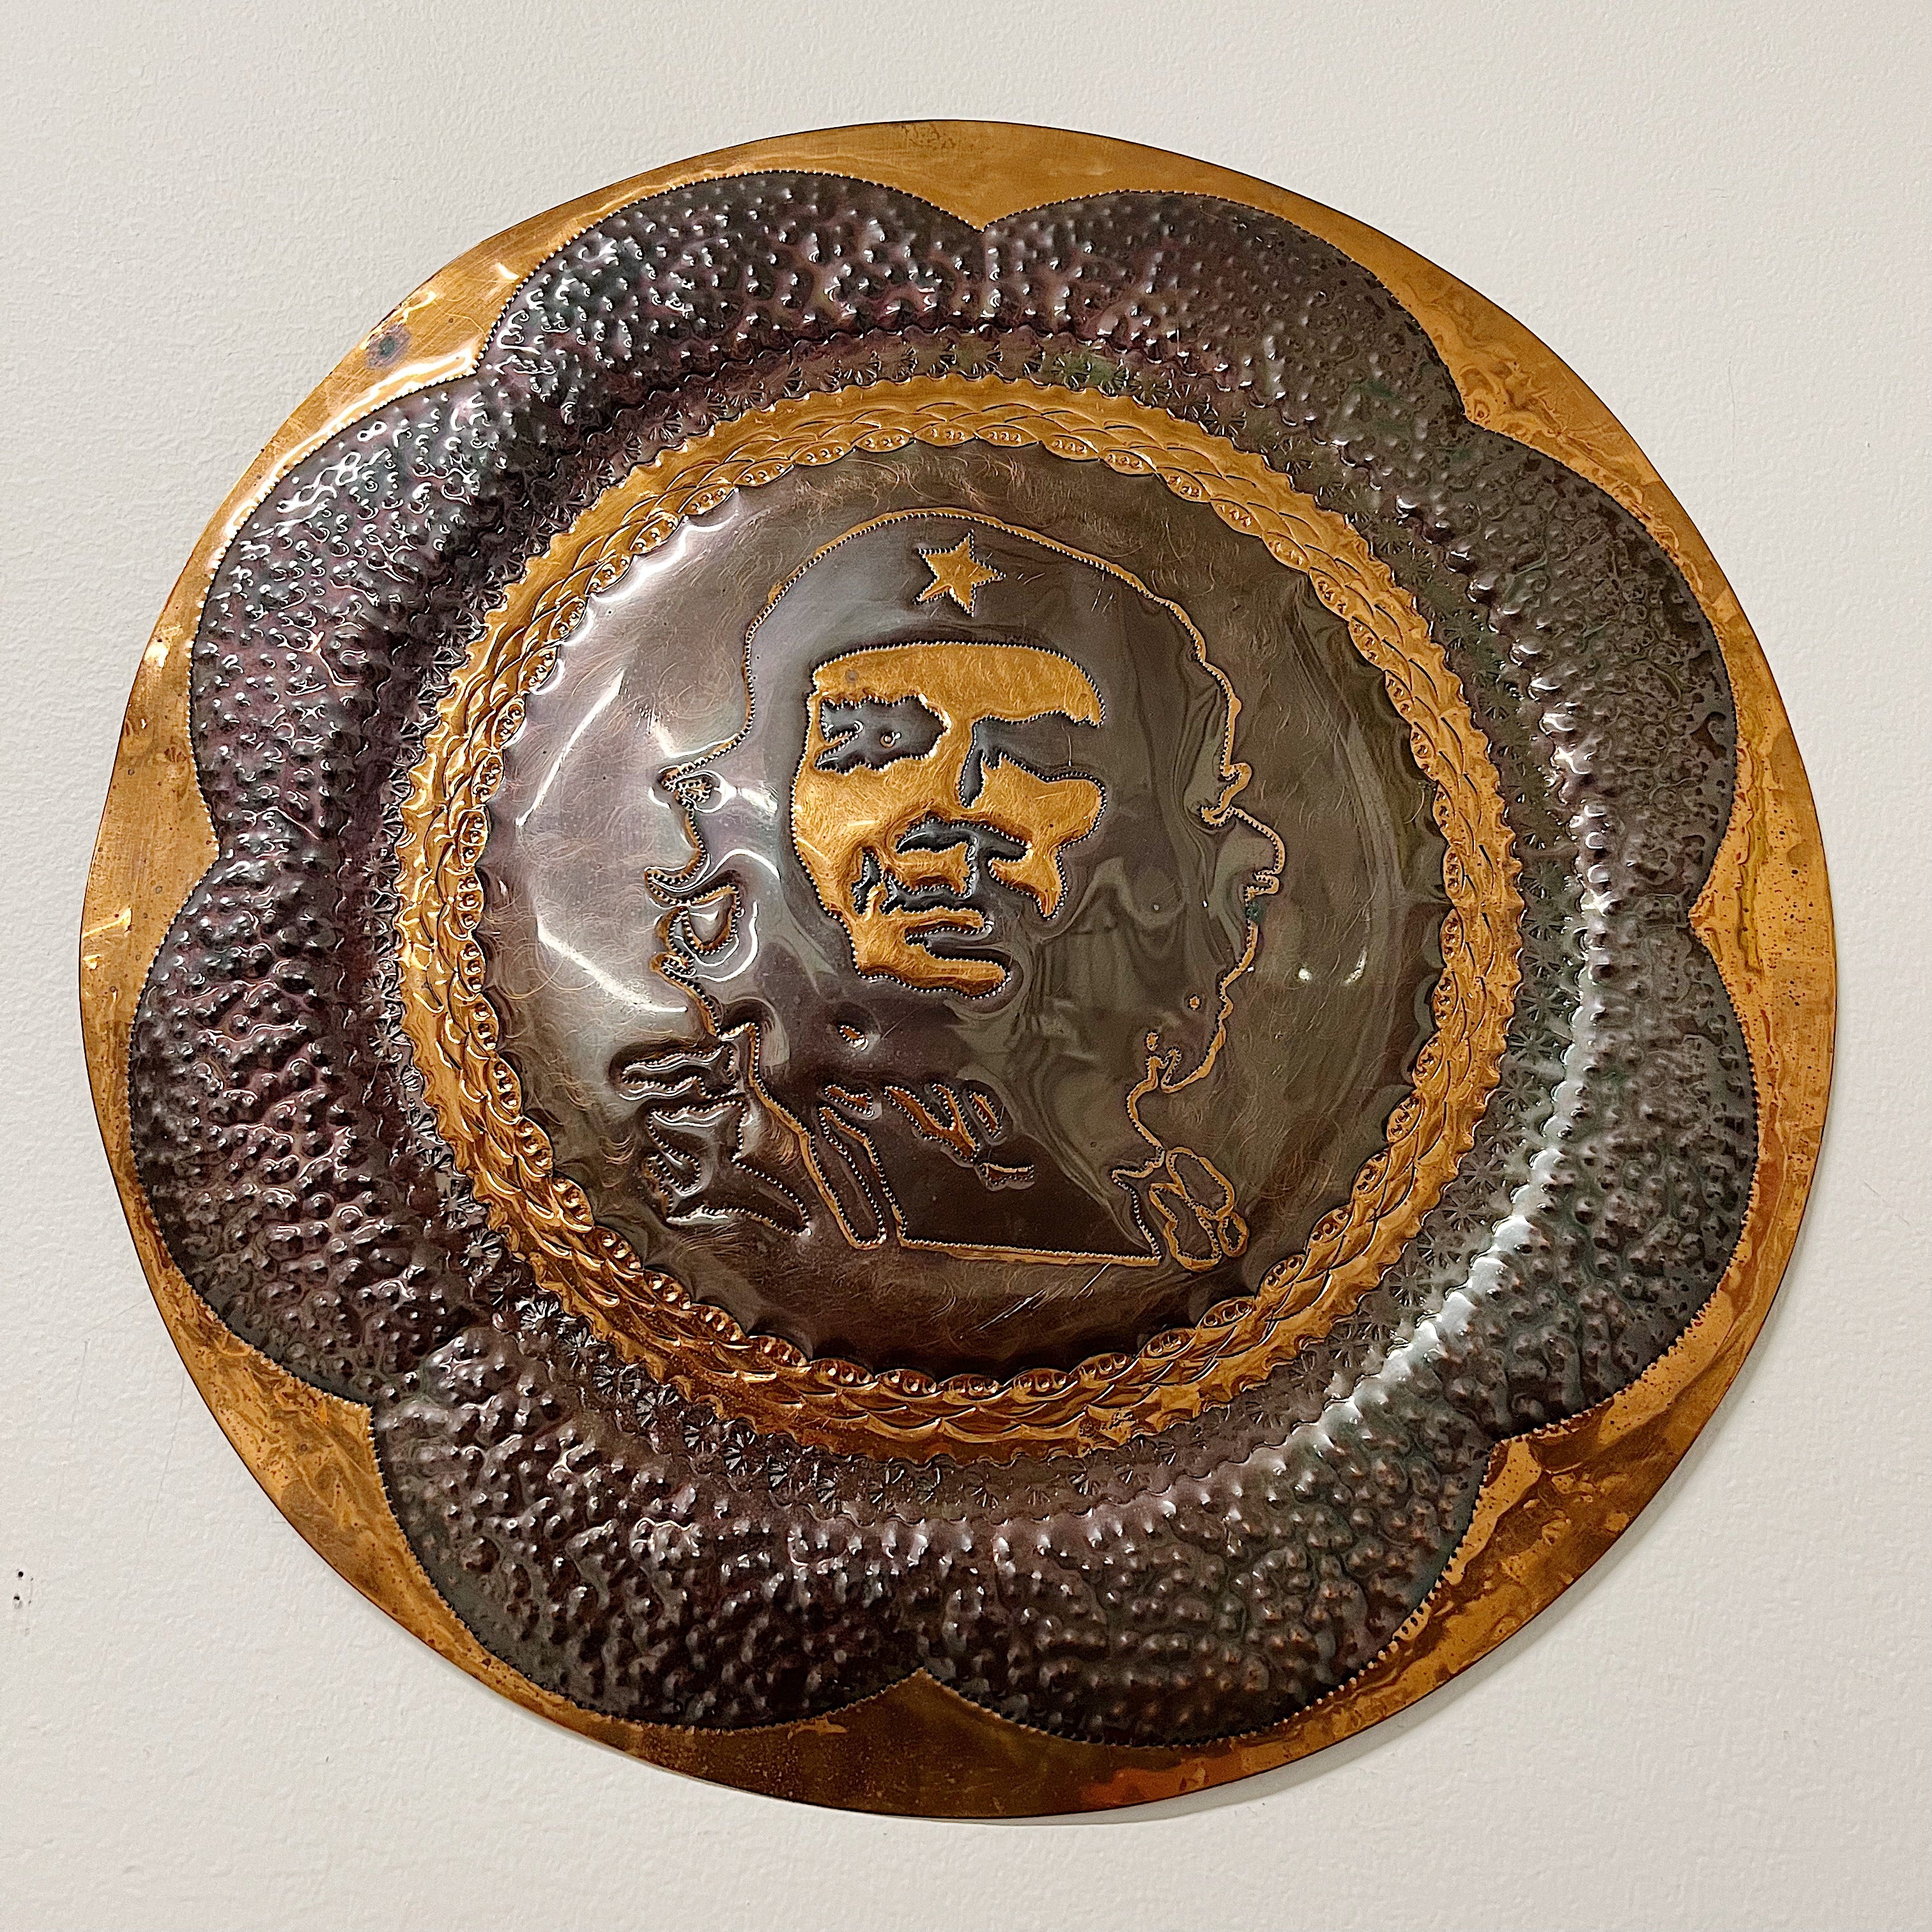 1970s Che Guevara Copper Relief Plaque - Vintage Counter Culture Artwork - Riveted Signed Metal Reliefs - Rare Counterculture Sculptures